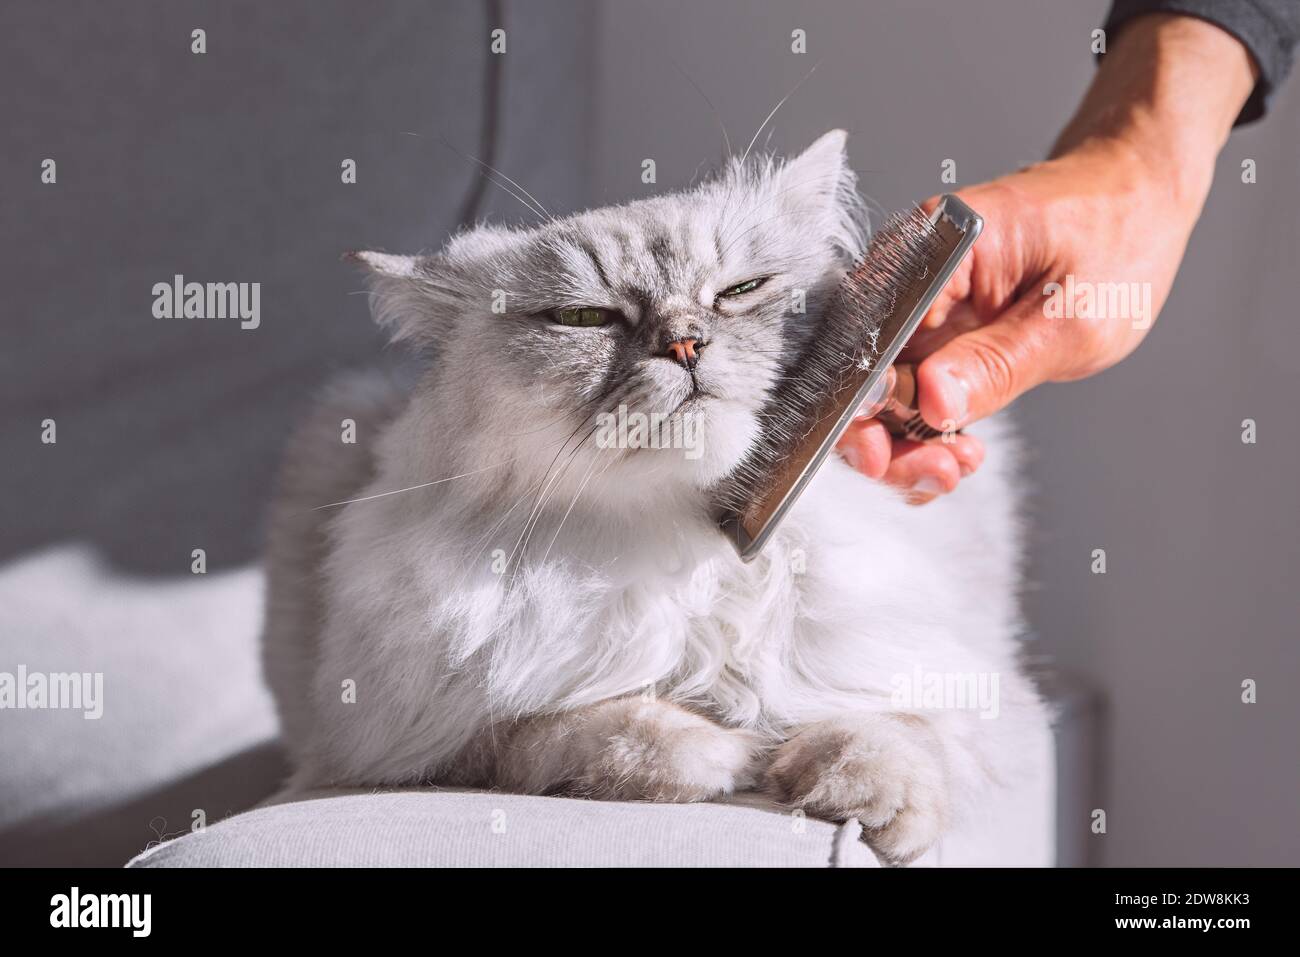 Hombre peinando a su gato persa gris. Dulce gato disfrutando mientras se cepilla. Foto de stock